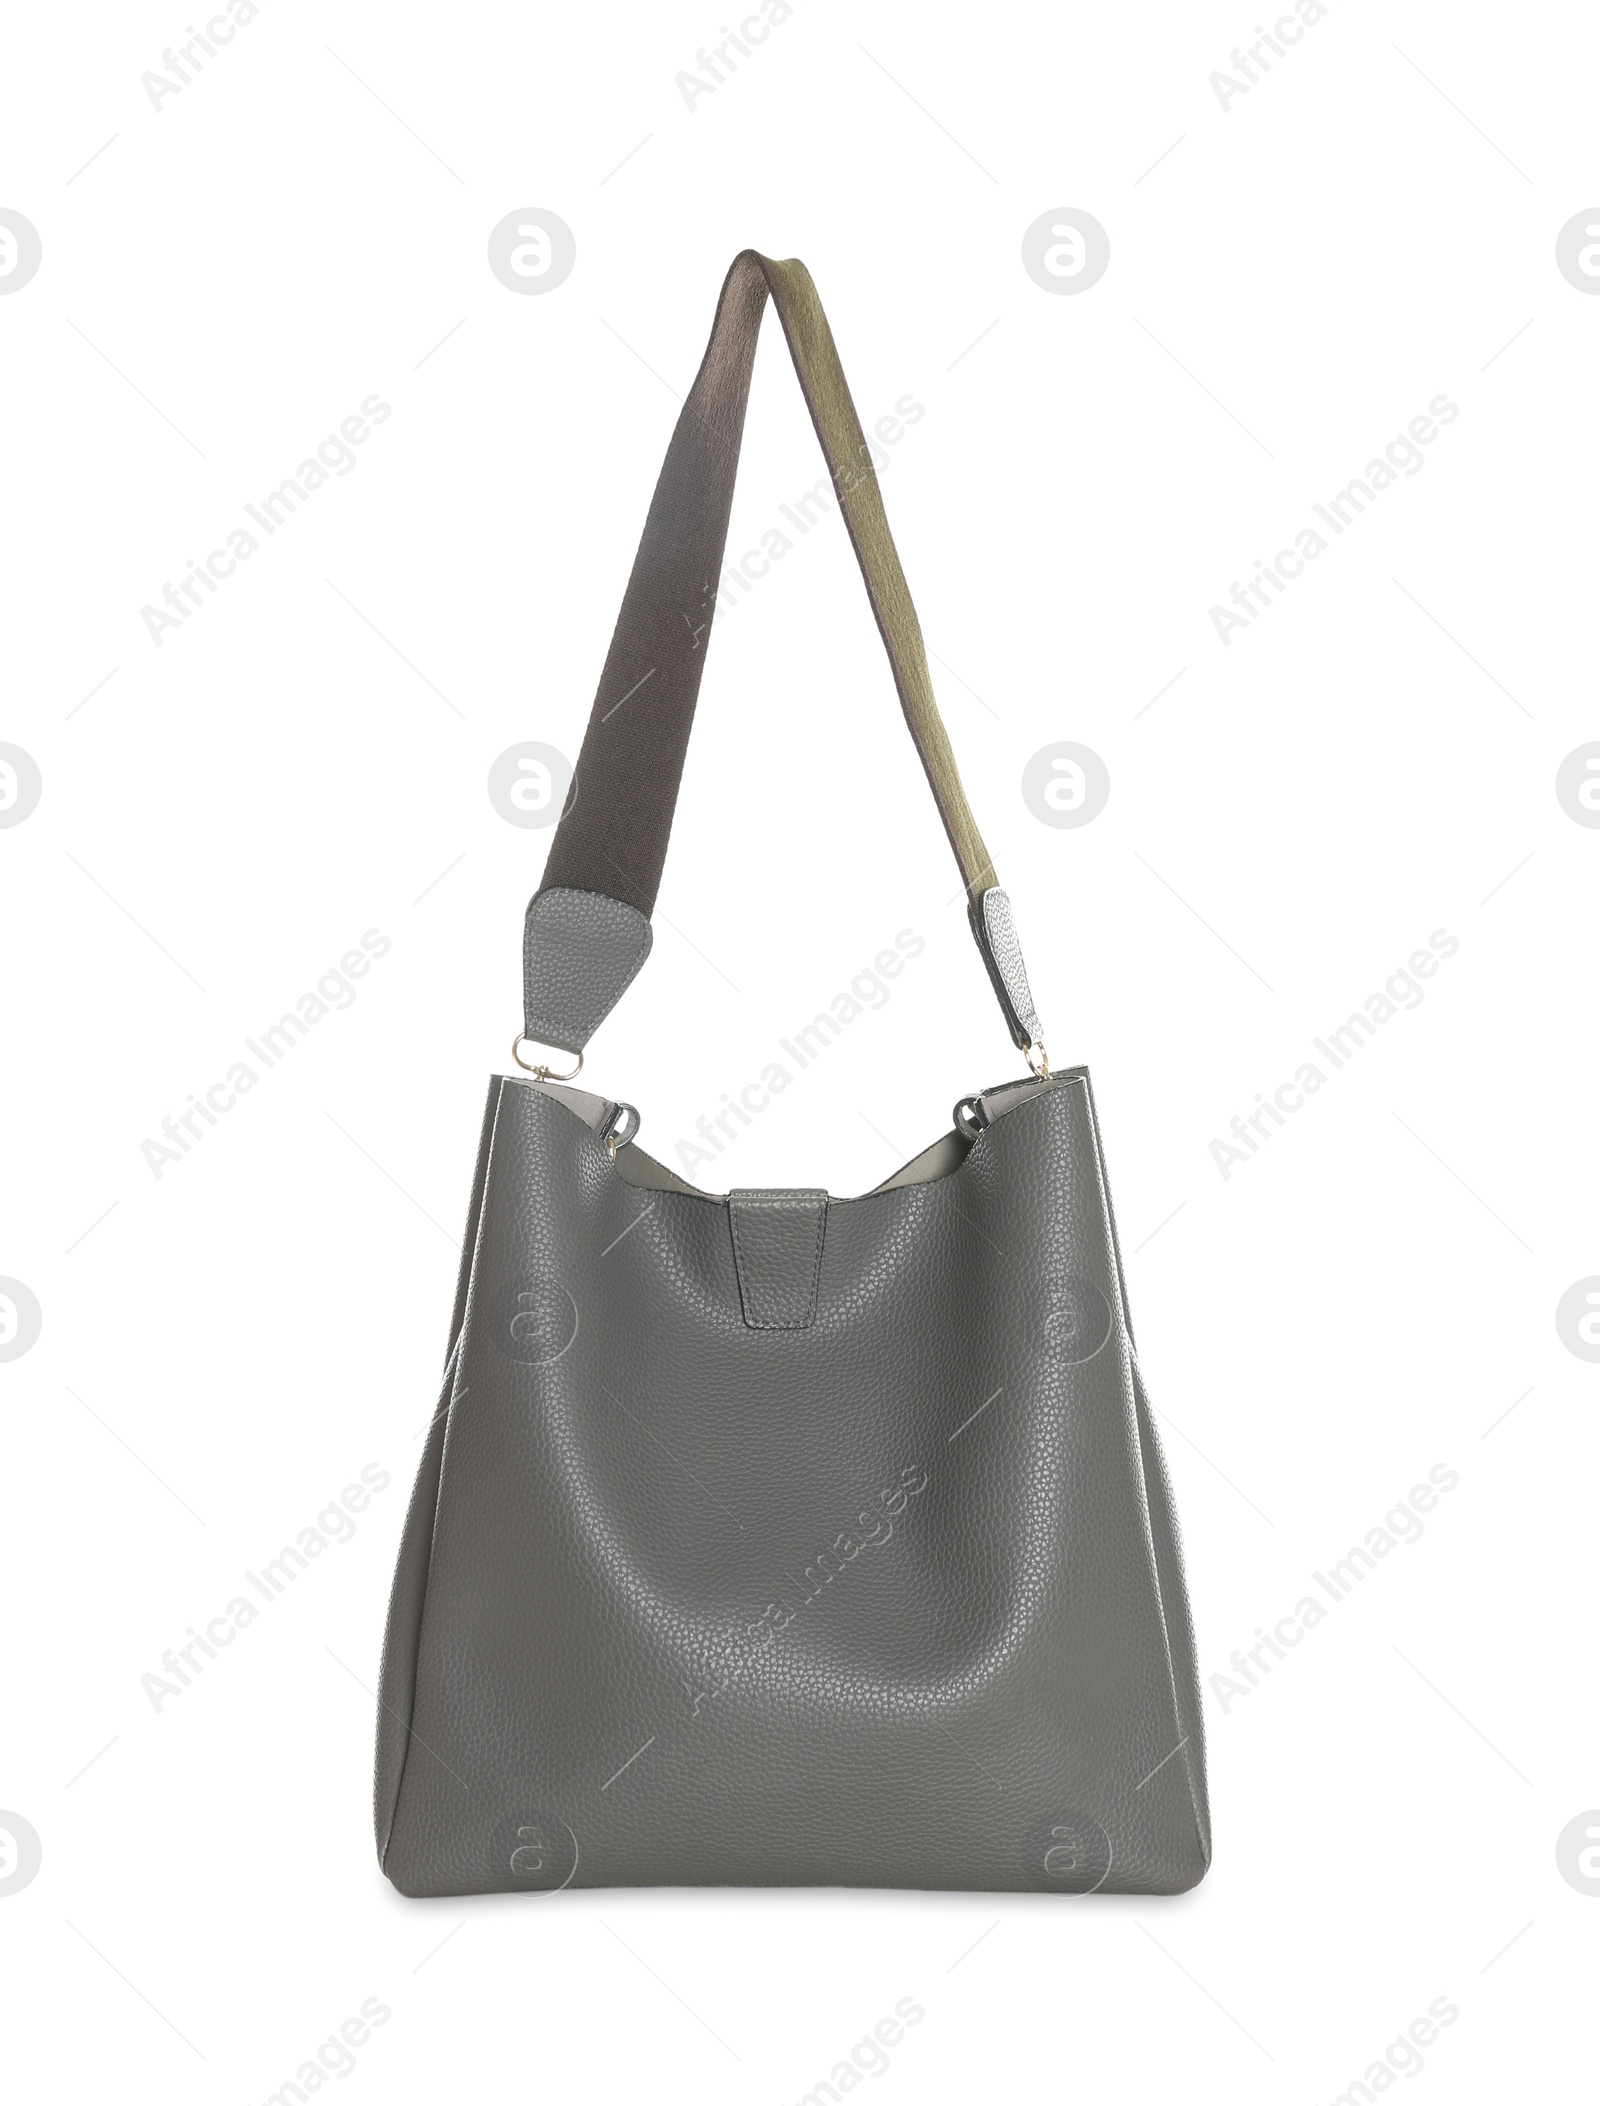 Photo of Stylish grey woman's bag isolated on white